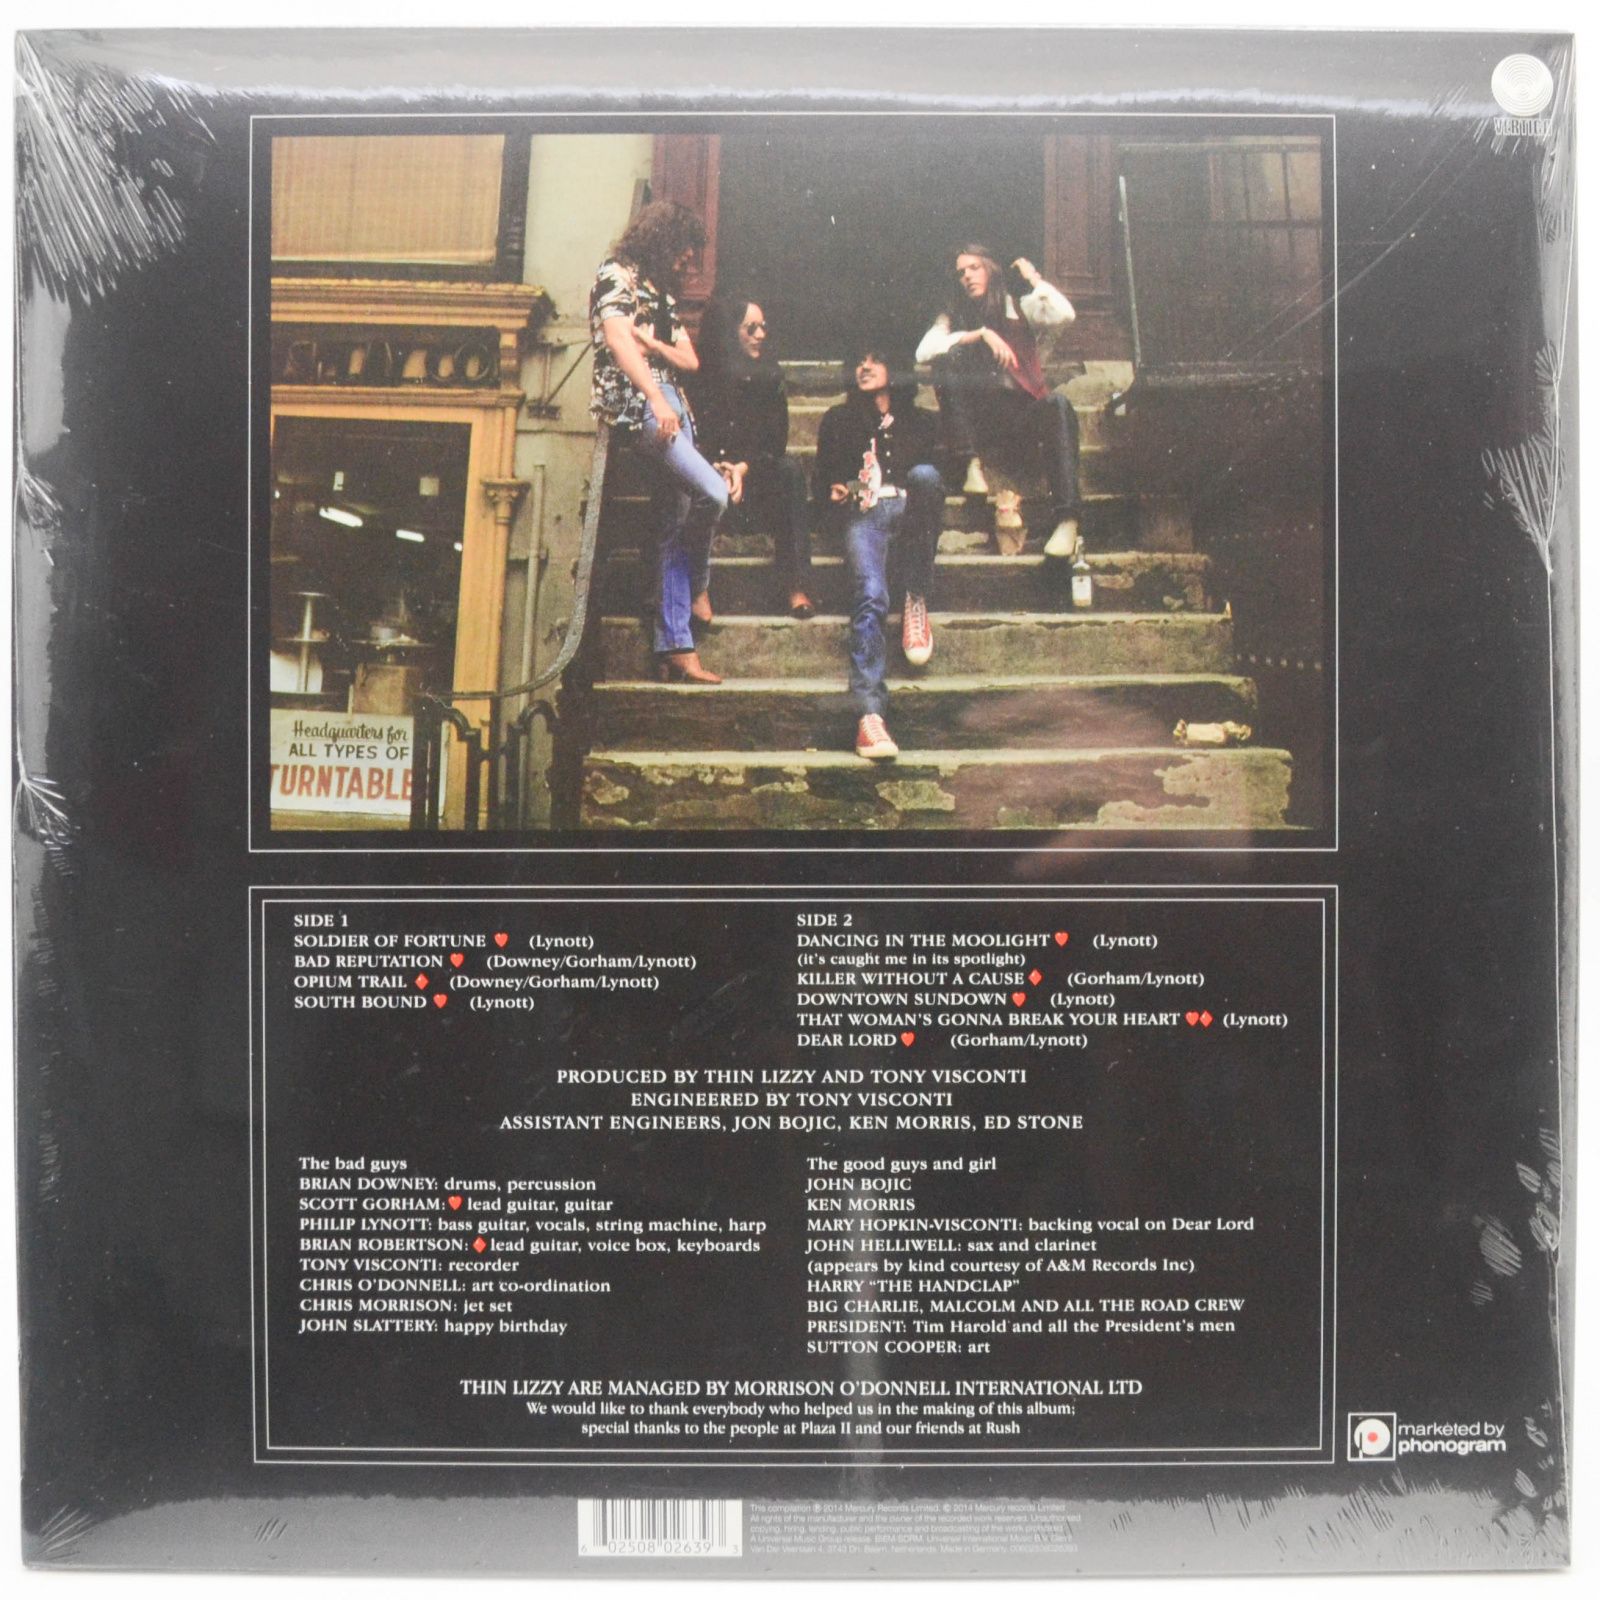 Thin Lizzy — Bad Reputation, 1977